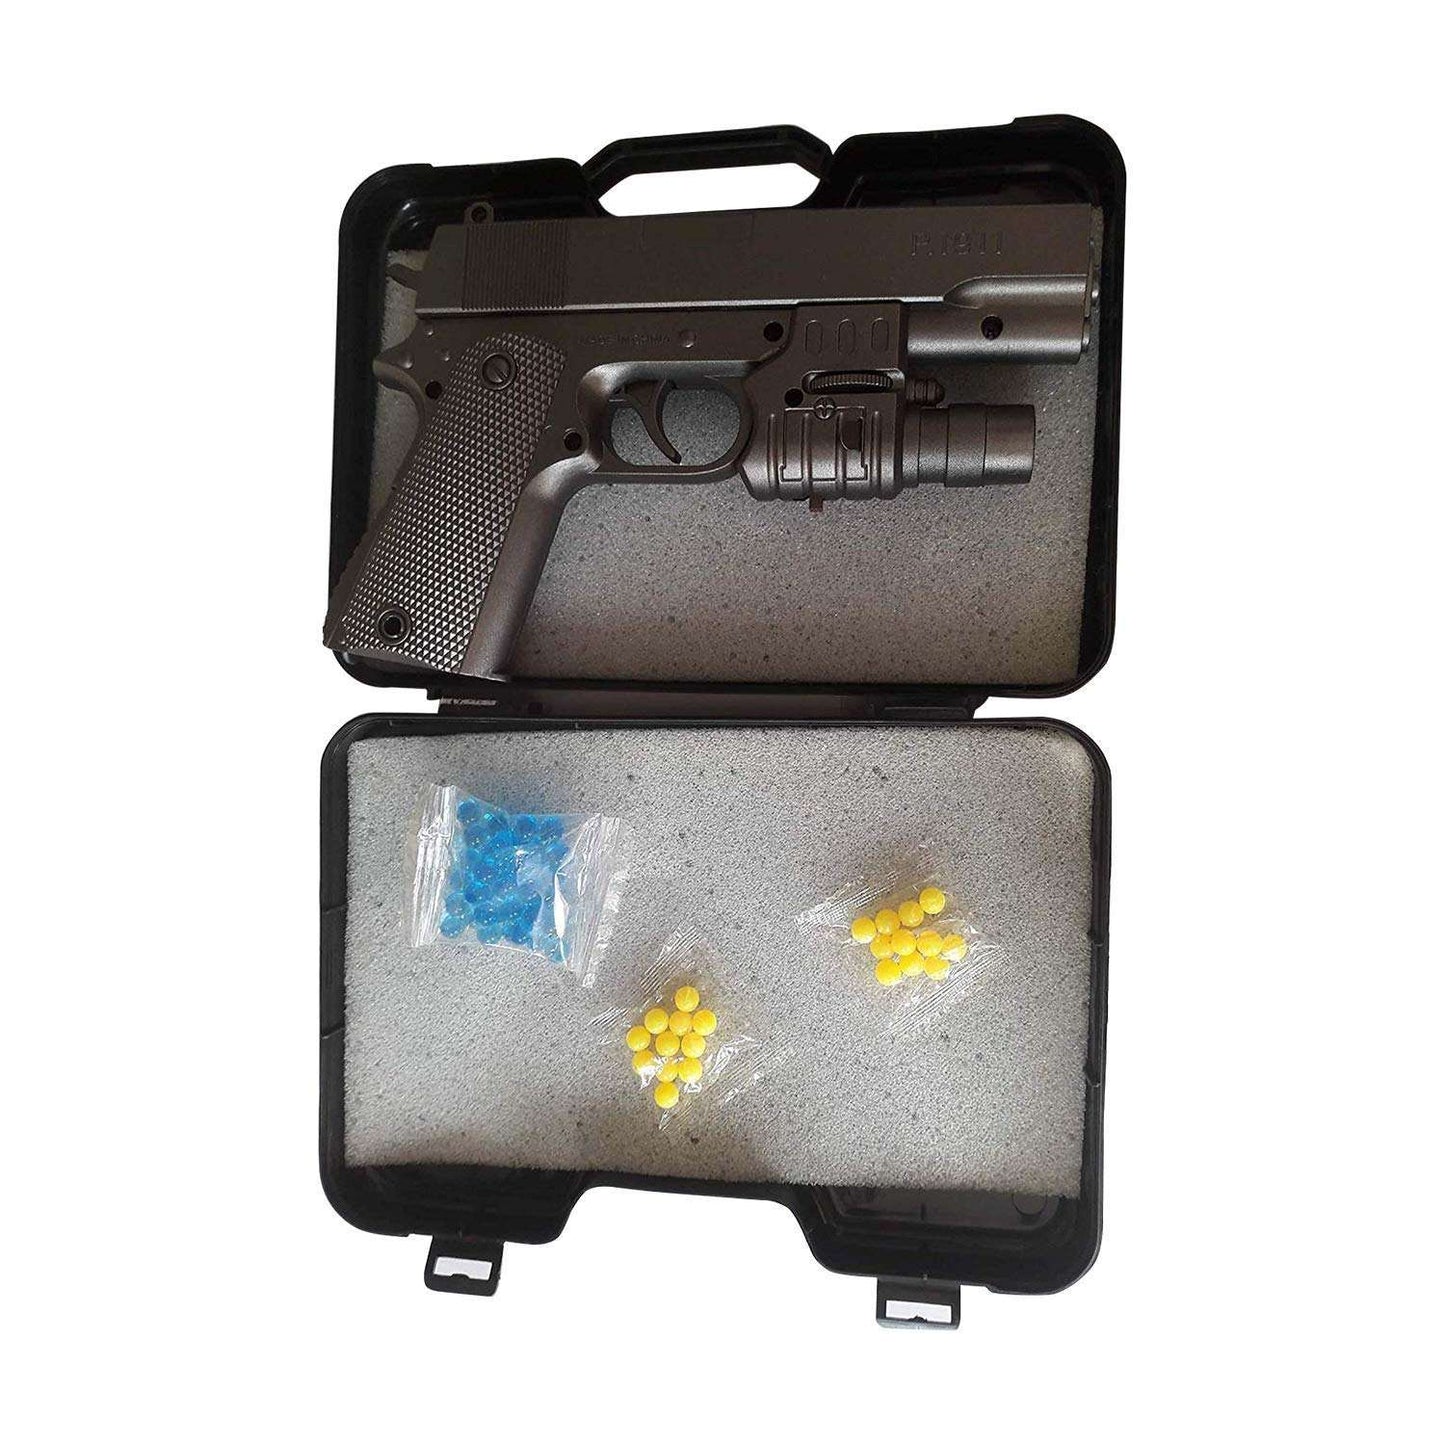 AZi Toys 2 in 1 Water Bullet Gun with Water Ball & 6 mm BB Bullets Guns & Darts (Black)